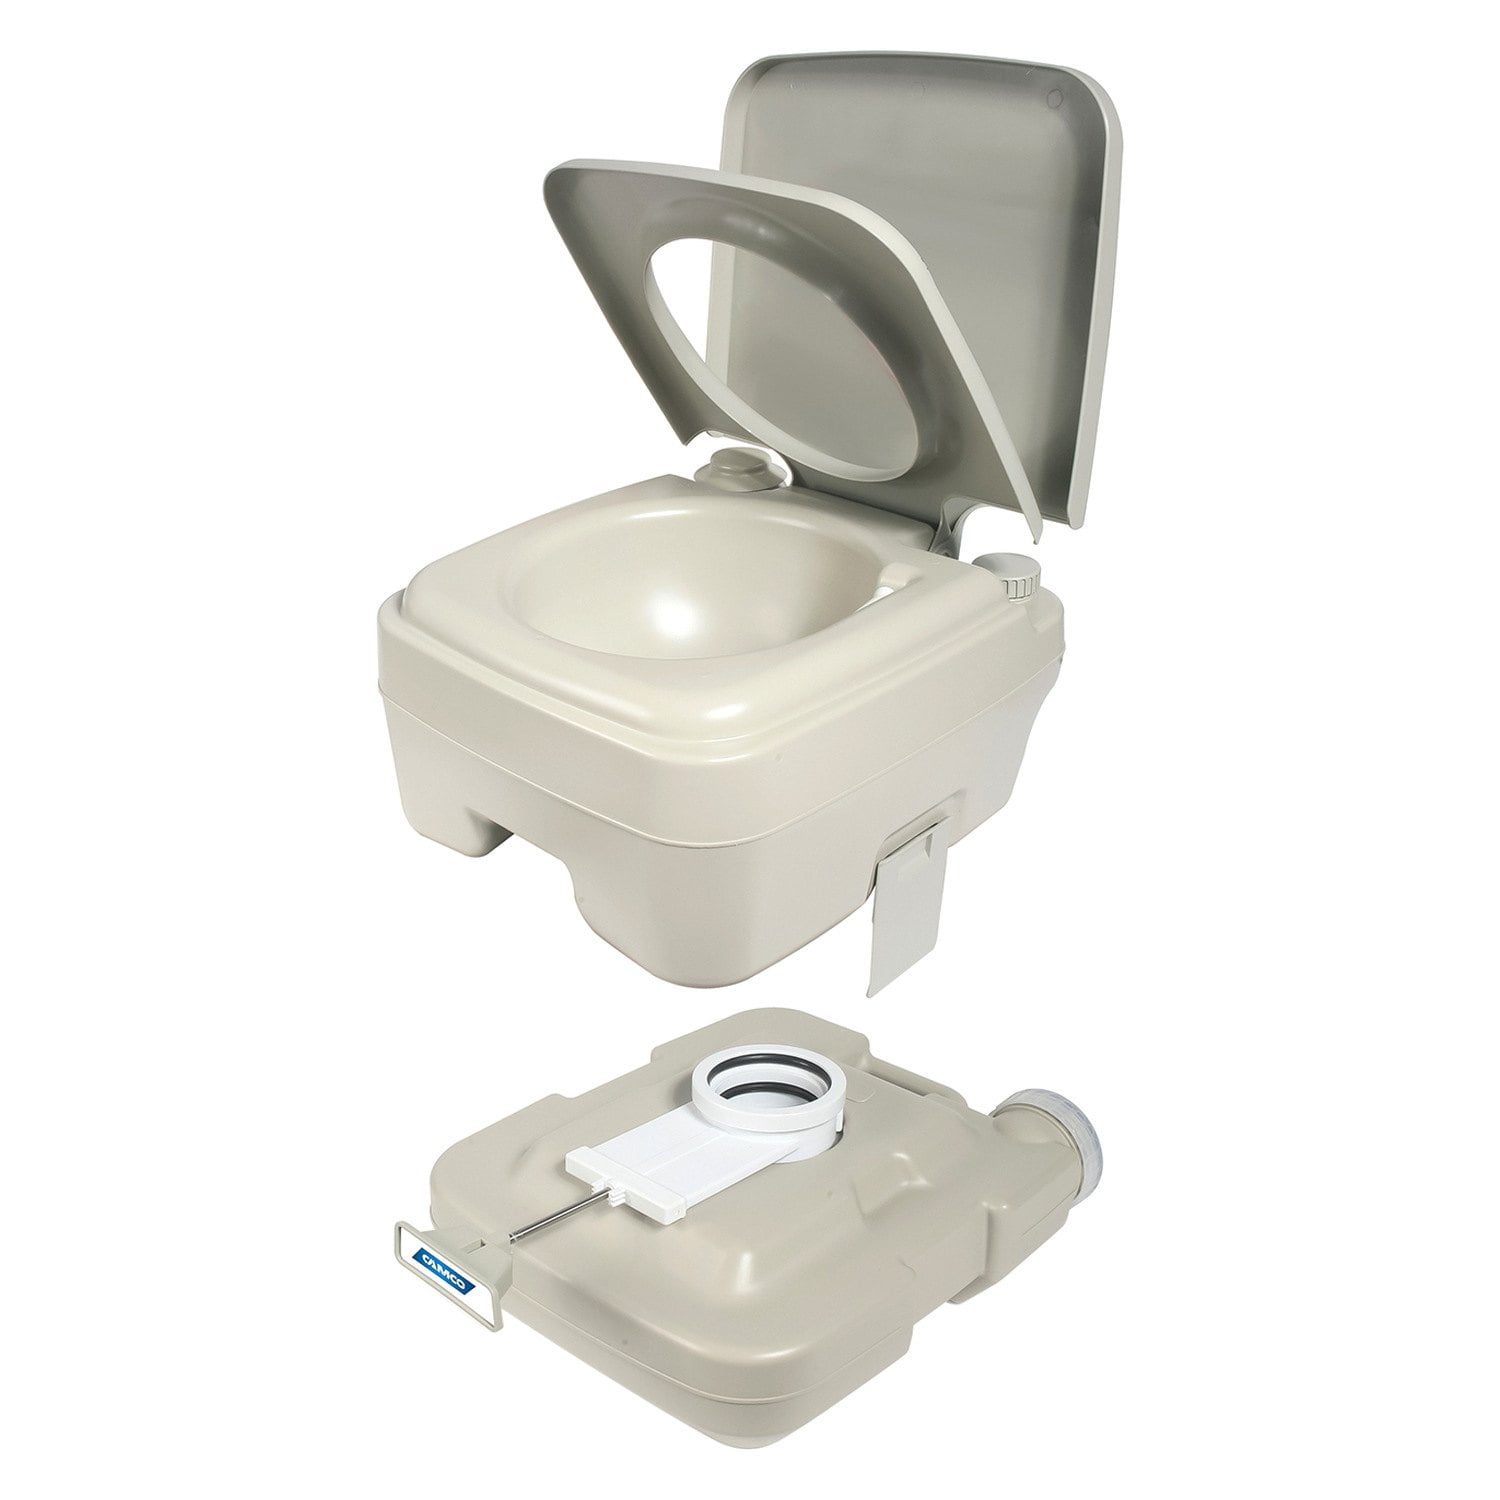 SLCATL320 Portable Toilet Outdoor & Travel Toilet 5.3 Gal. 